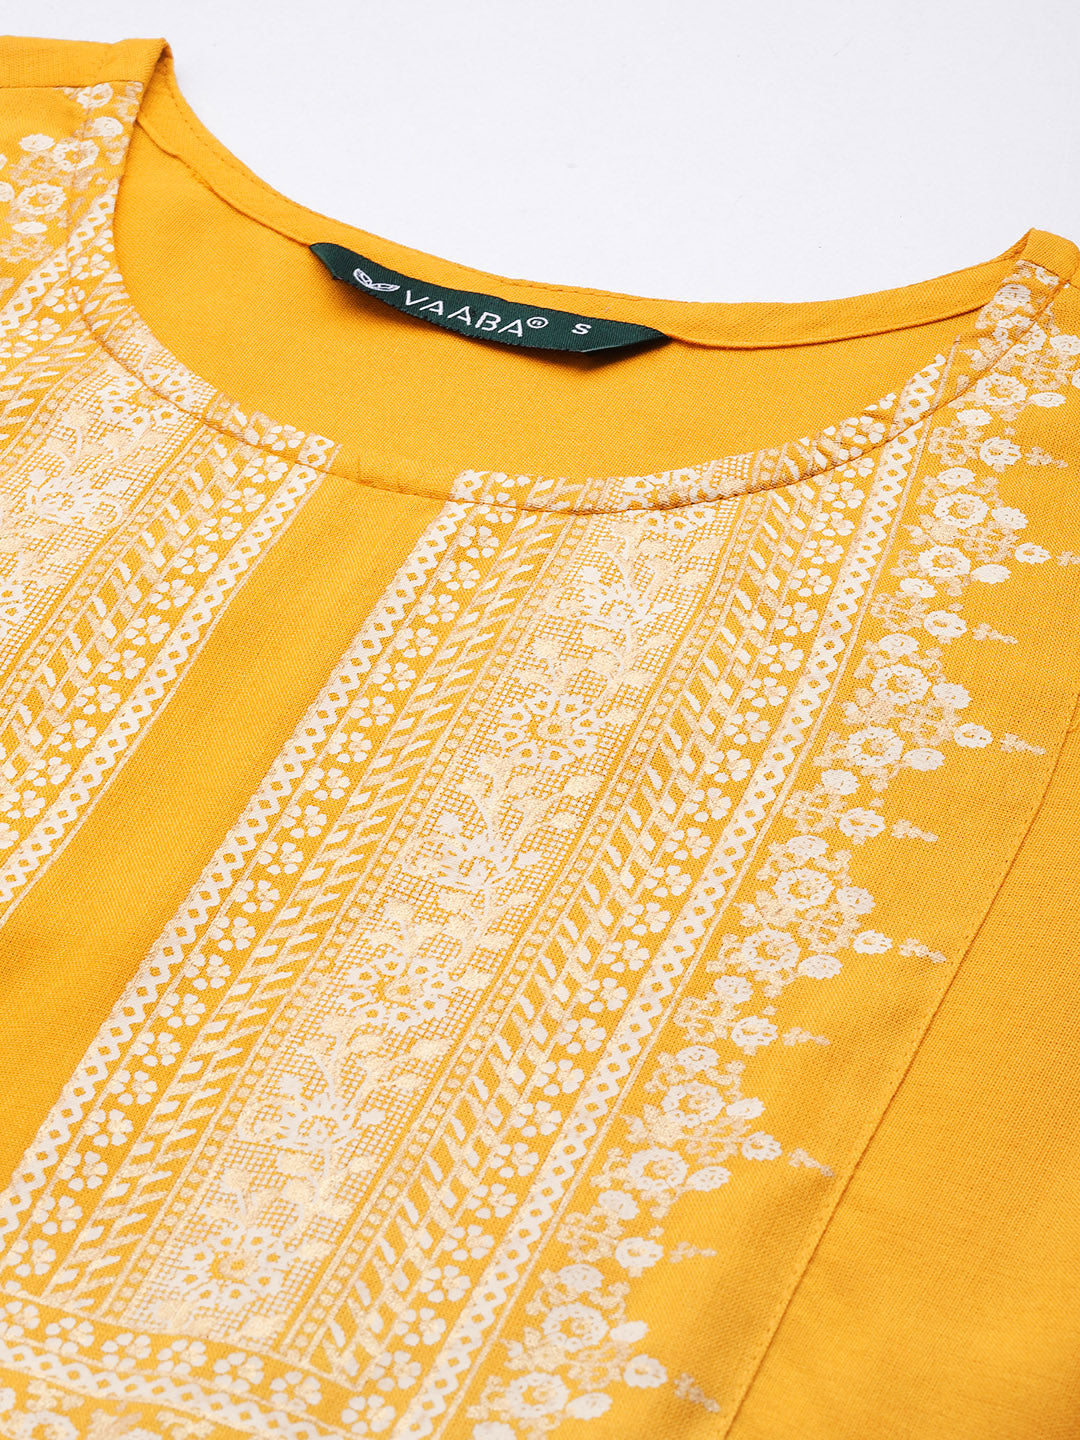 Women's Yellow Rayon Panelled Printed A-Line Kurta Trouser Set With Dupatta - VAABA